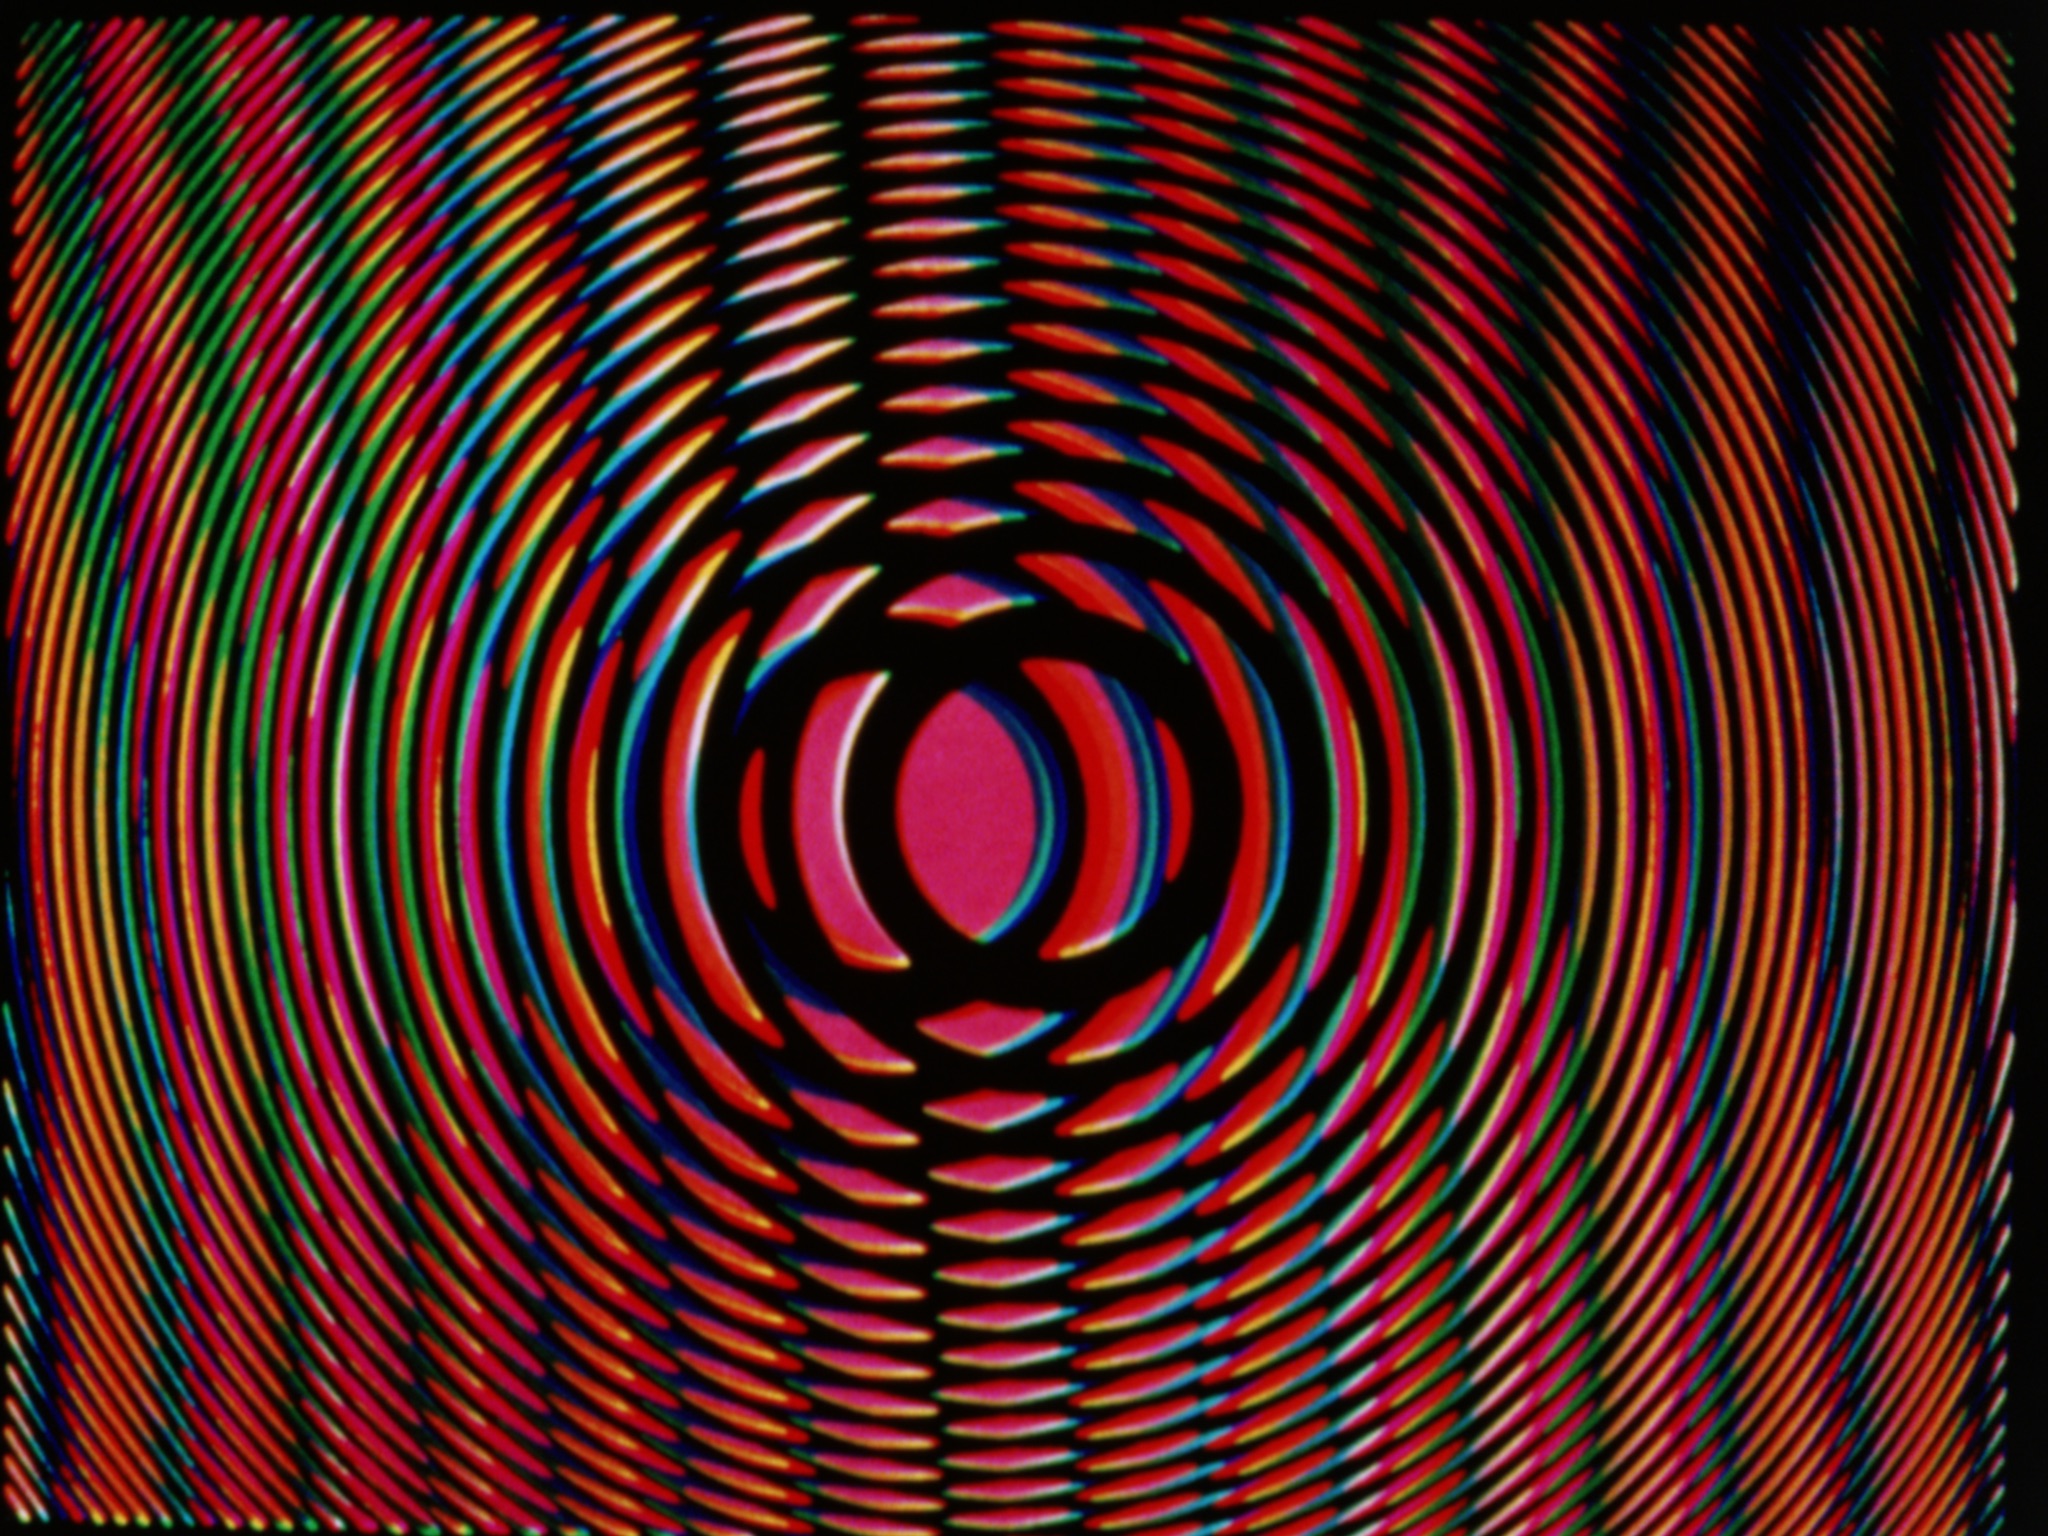 Stan VanDerBeek, Moirage (still), 1967, 16mm film and Digital transfer, color, sound, 9:21 min.